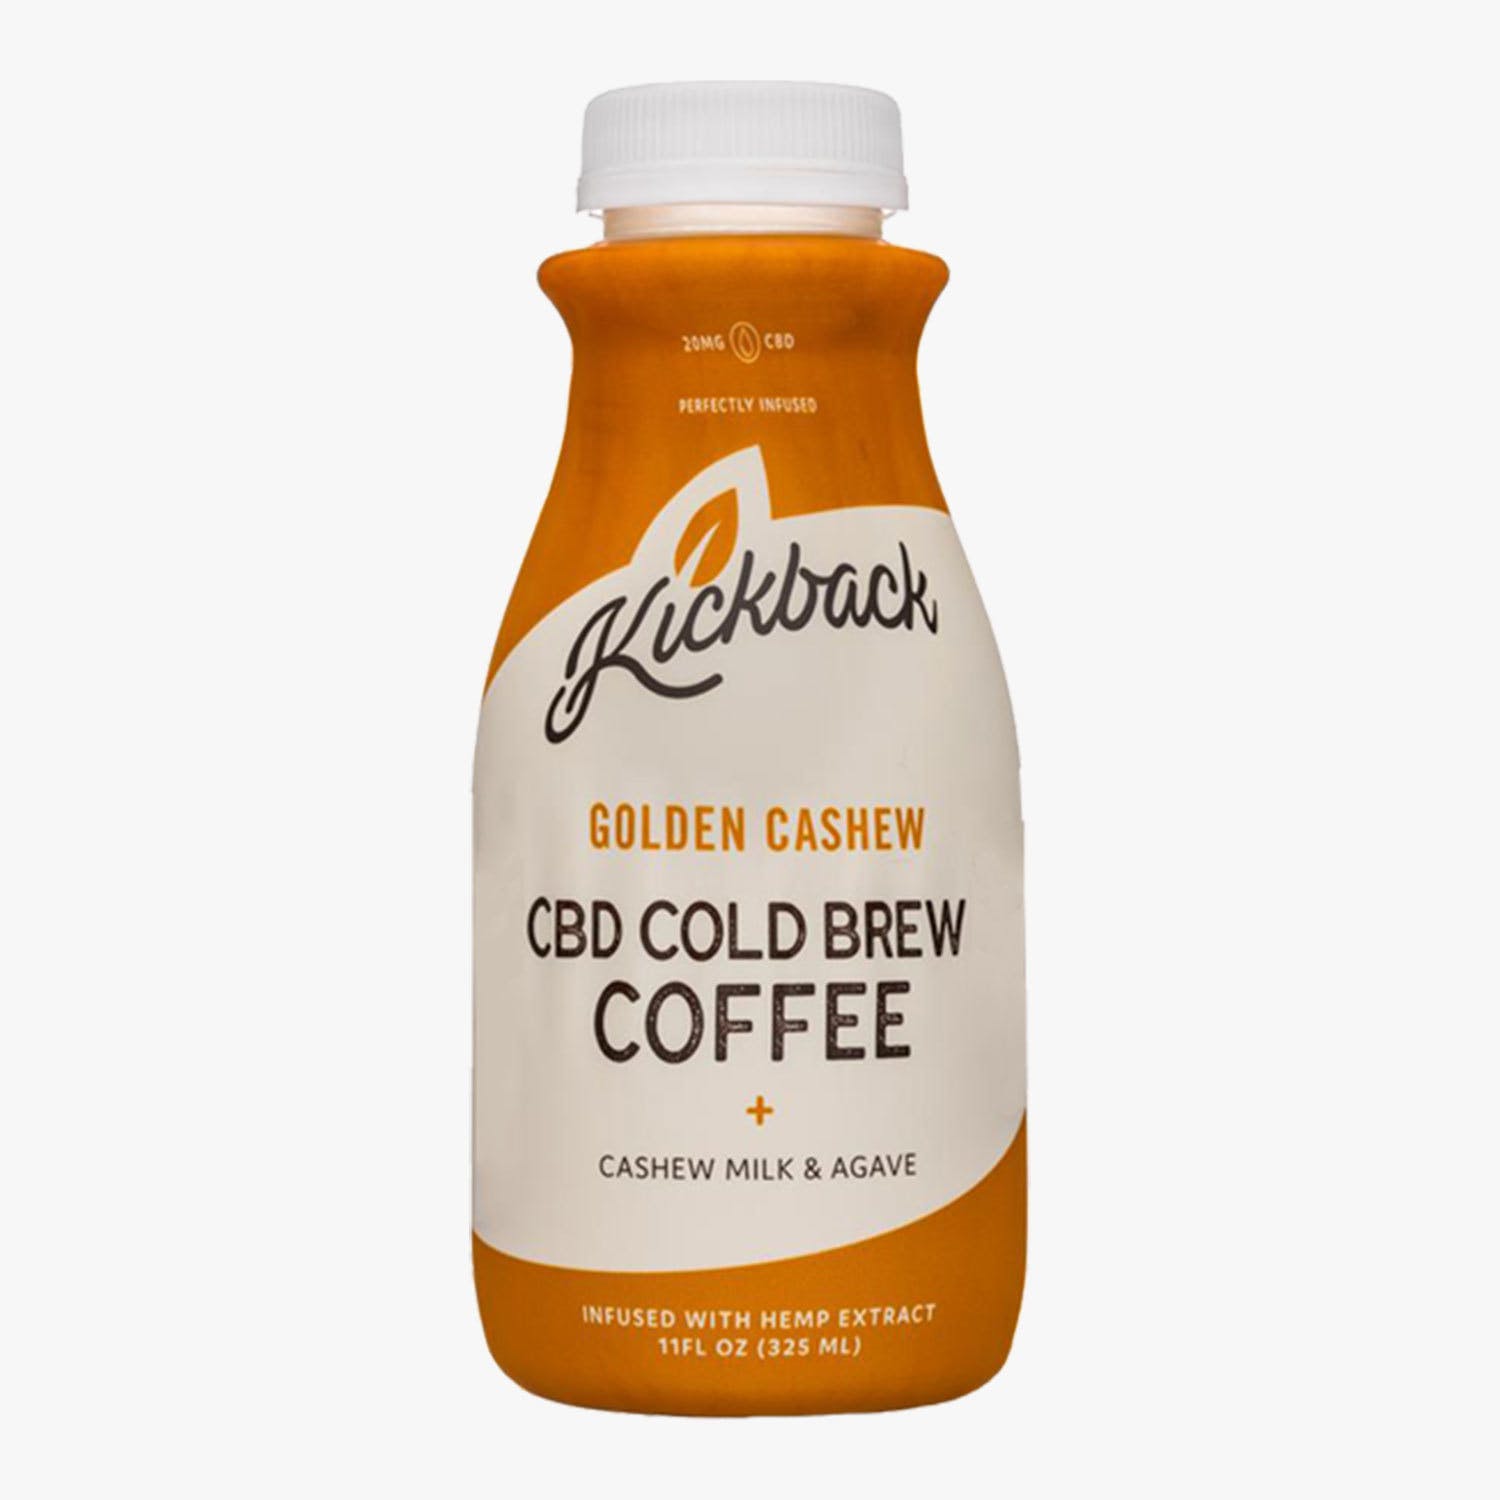 Golden Cashew Cold Brew